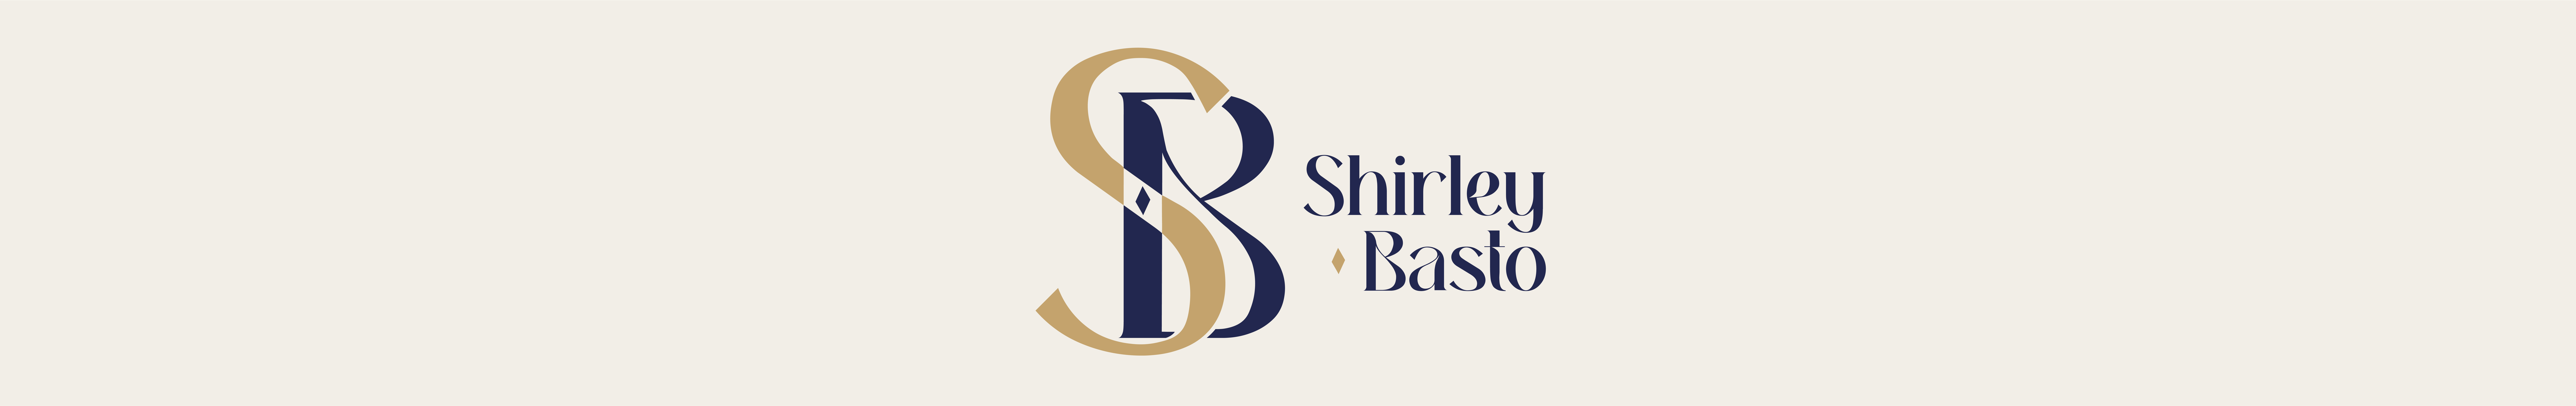 shirley basto's profile banner